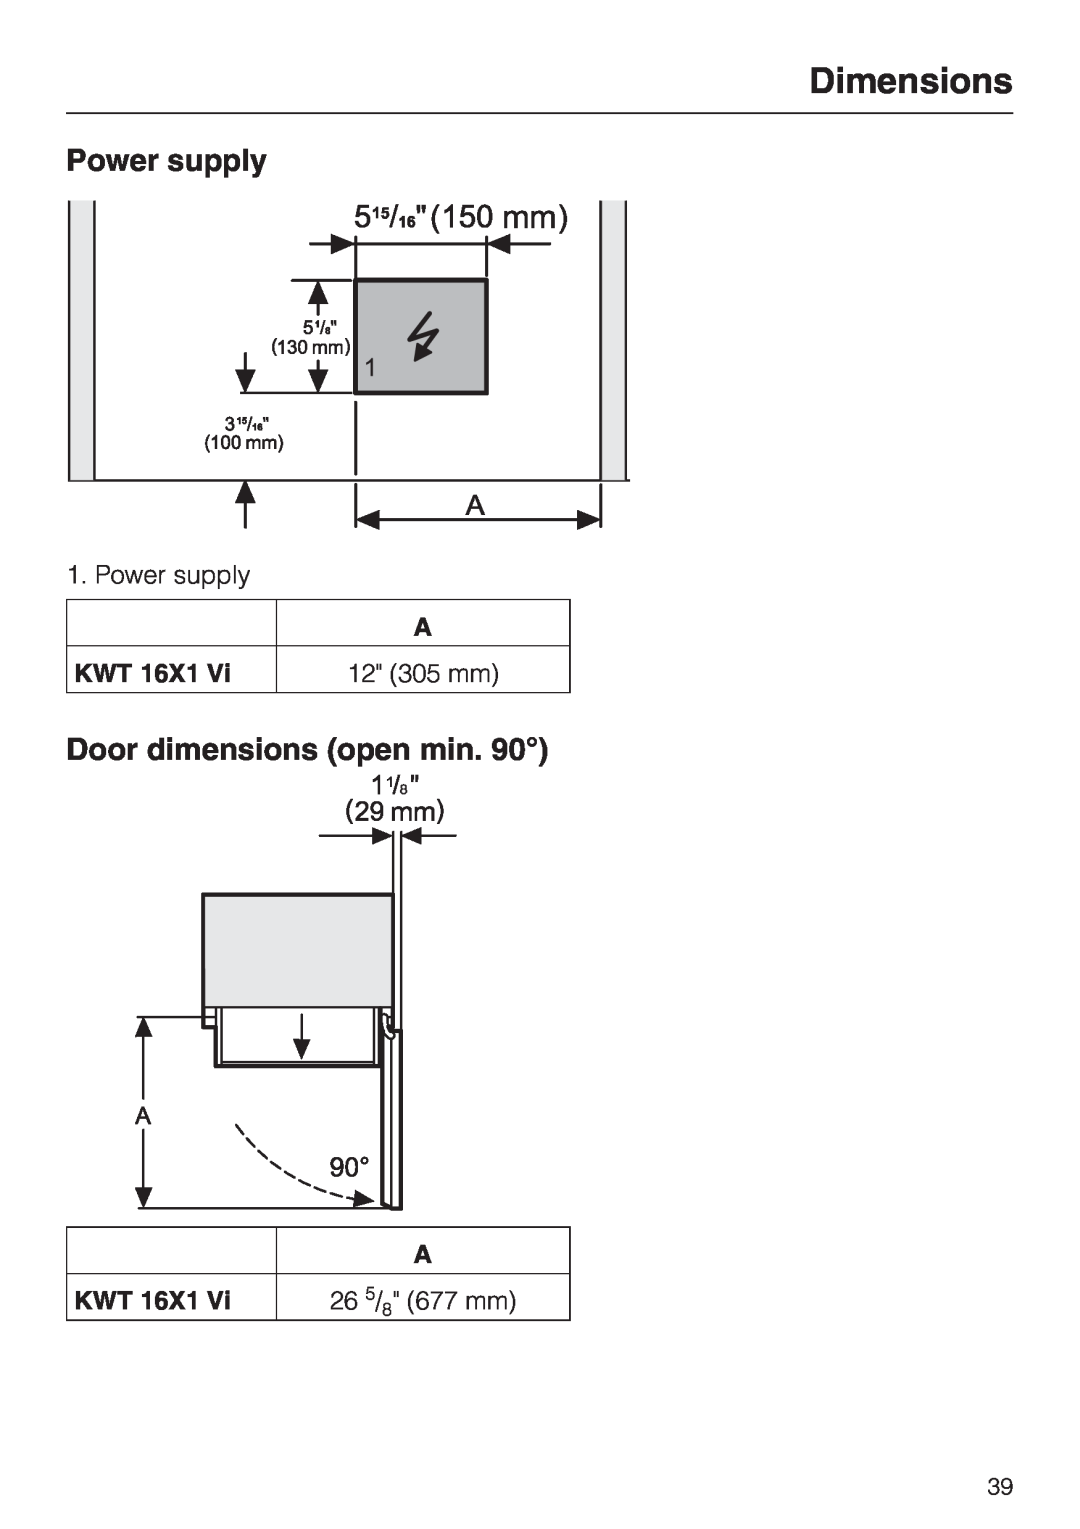 Miele KWT1601VI, KWT1611VI installation instructions Dimensions, Power supply, Door dimensions open min, Kwt, 12 305 mm 